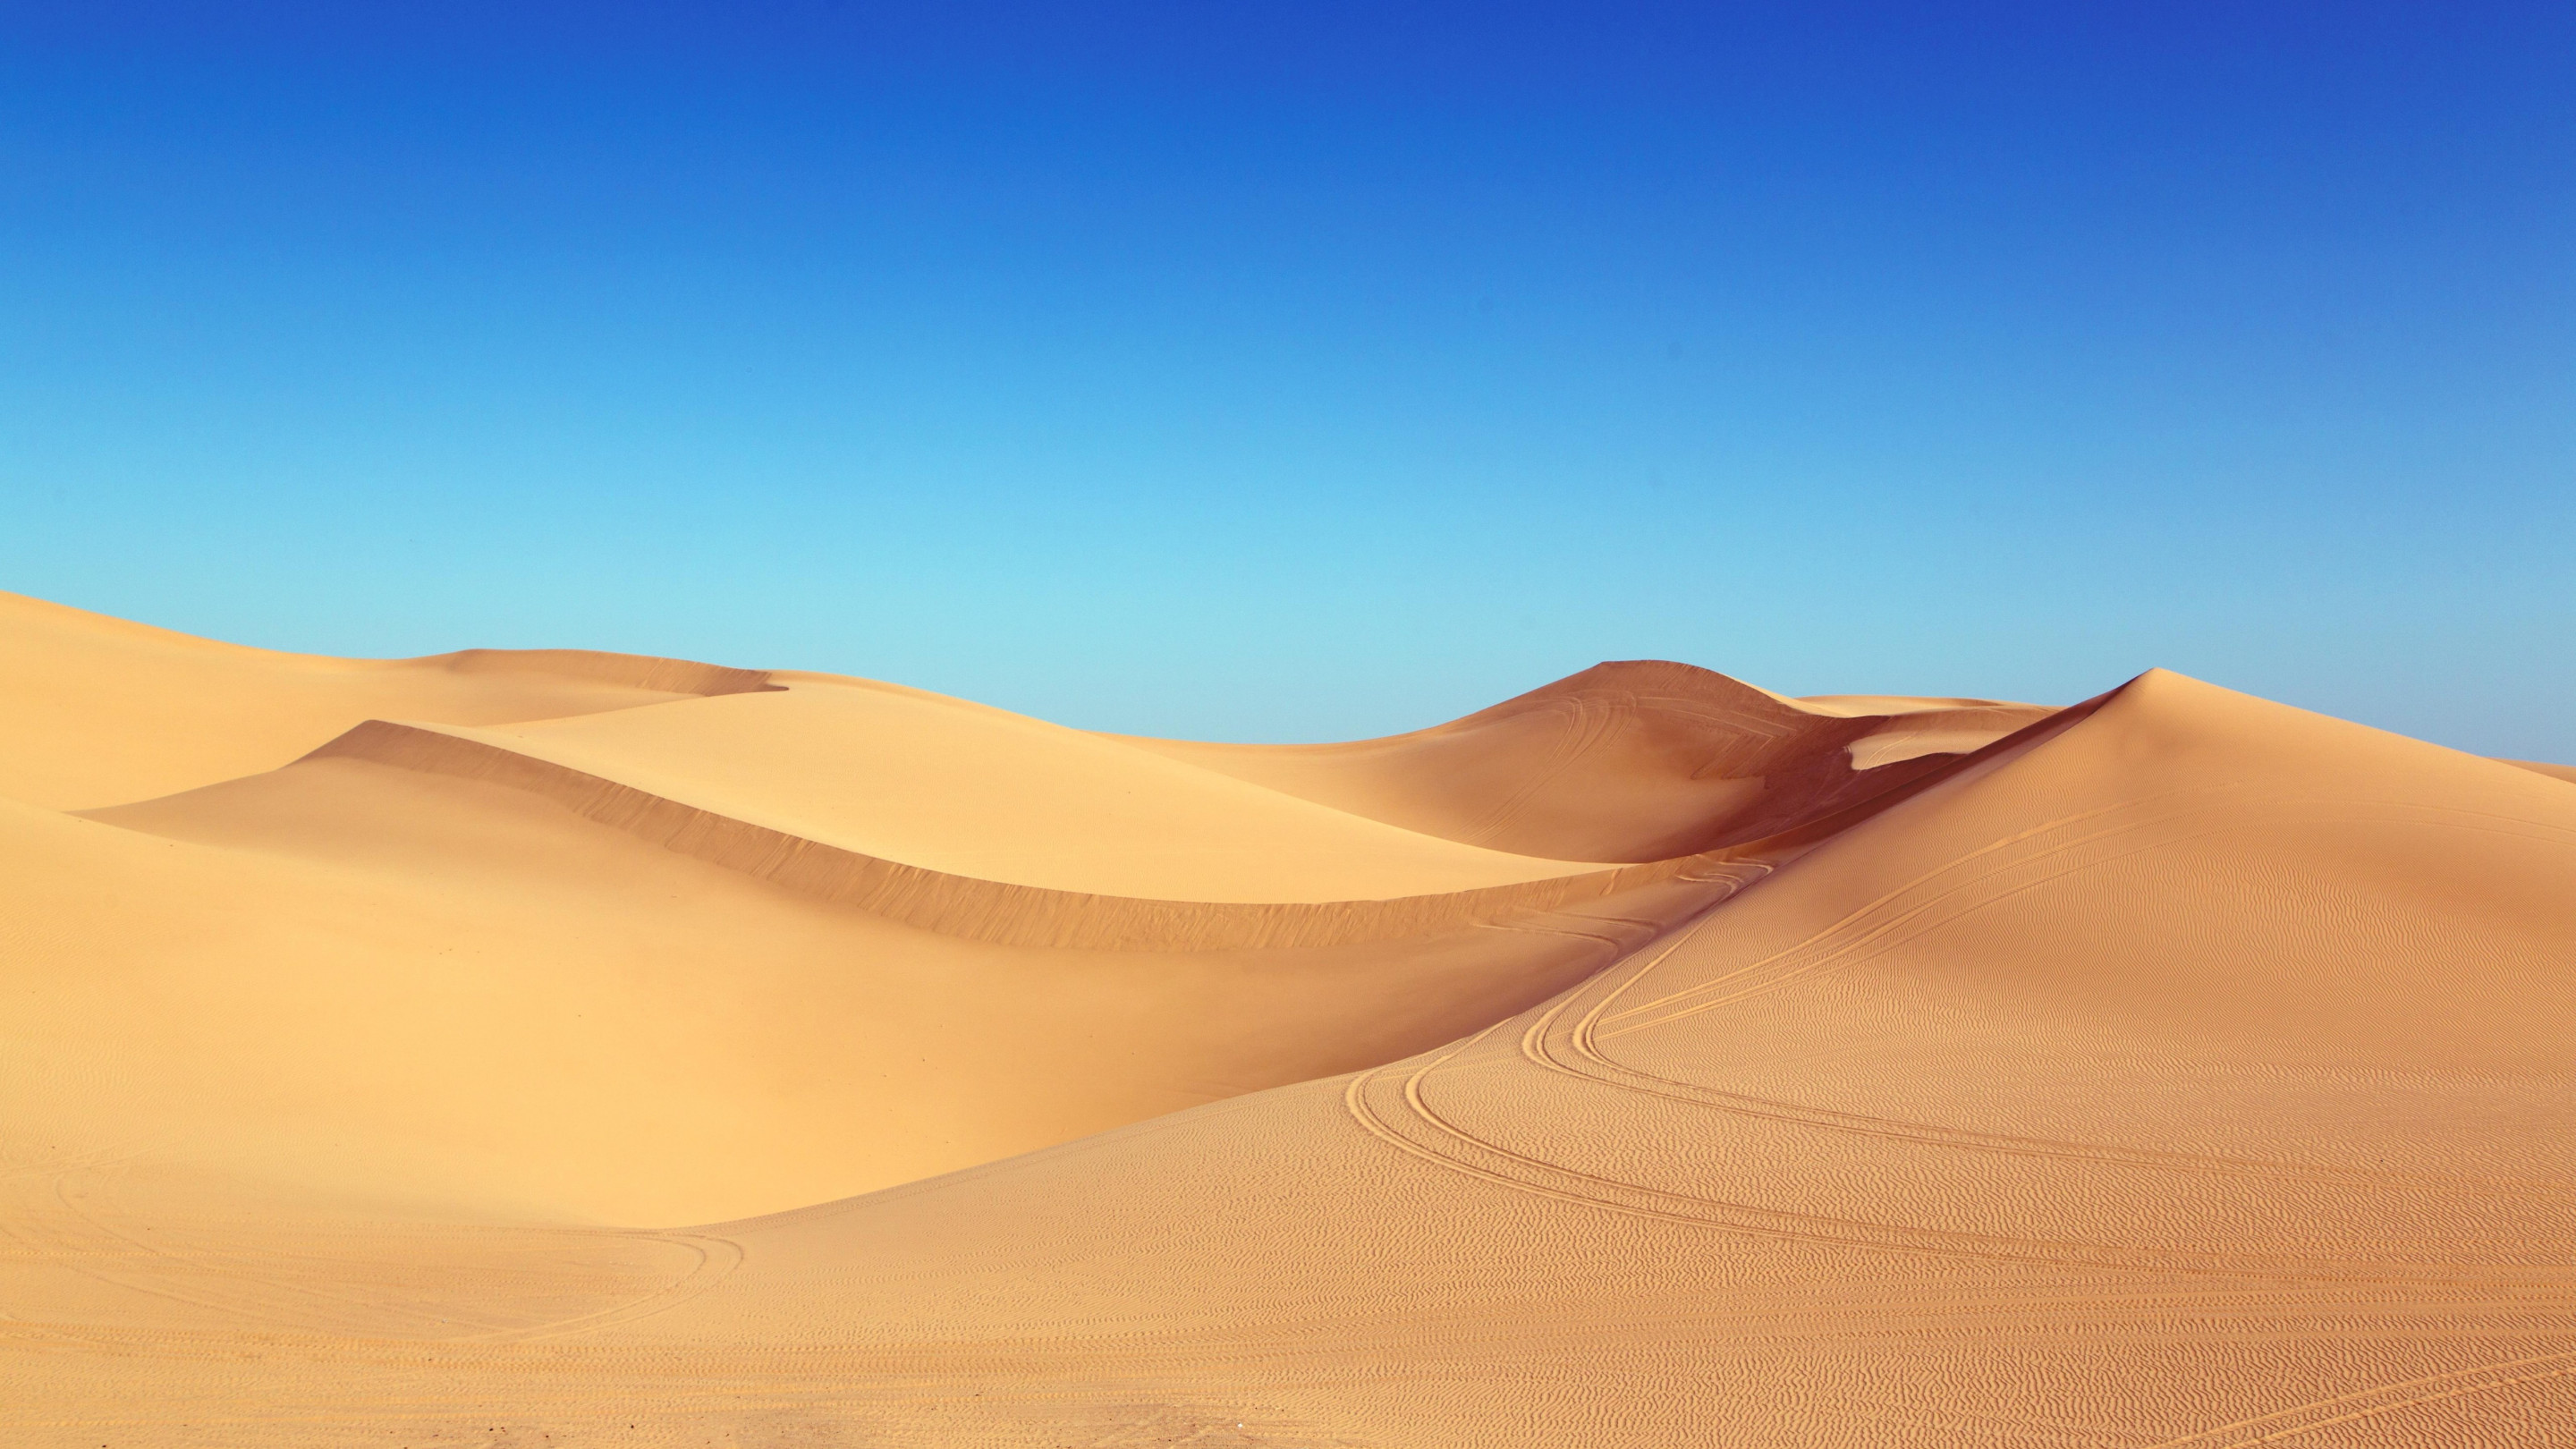 Blue sky and desert dunes wallpaper 2880x1620